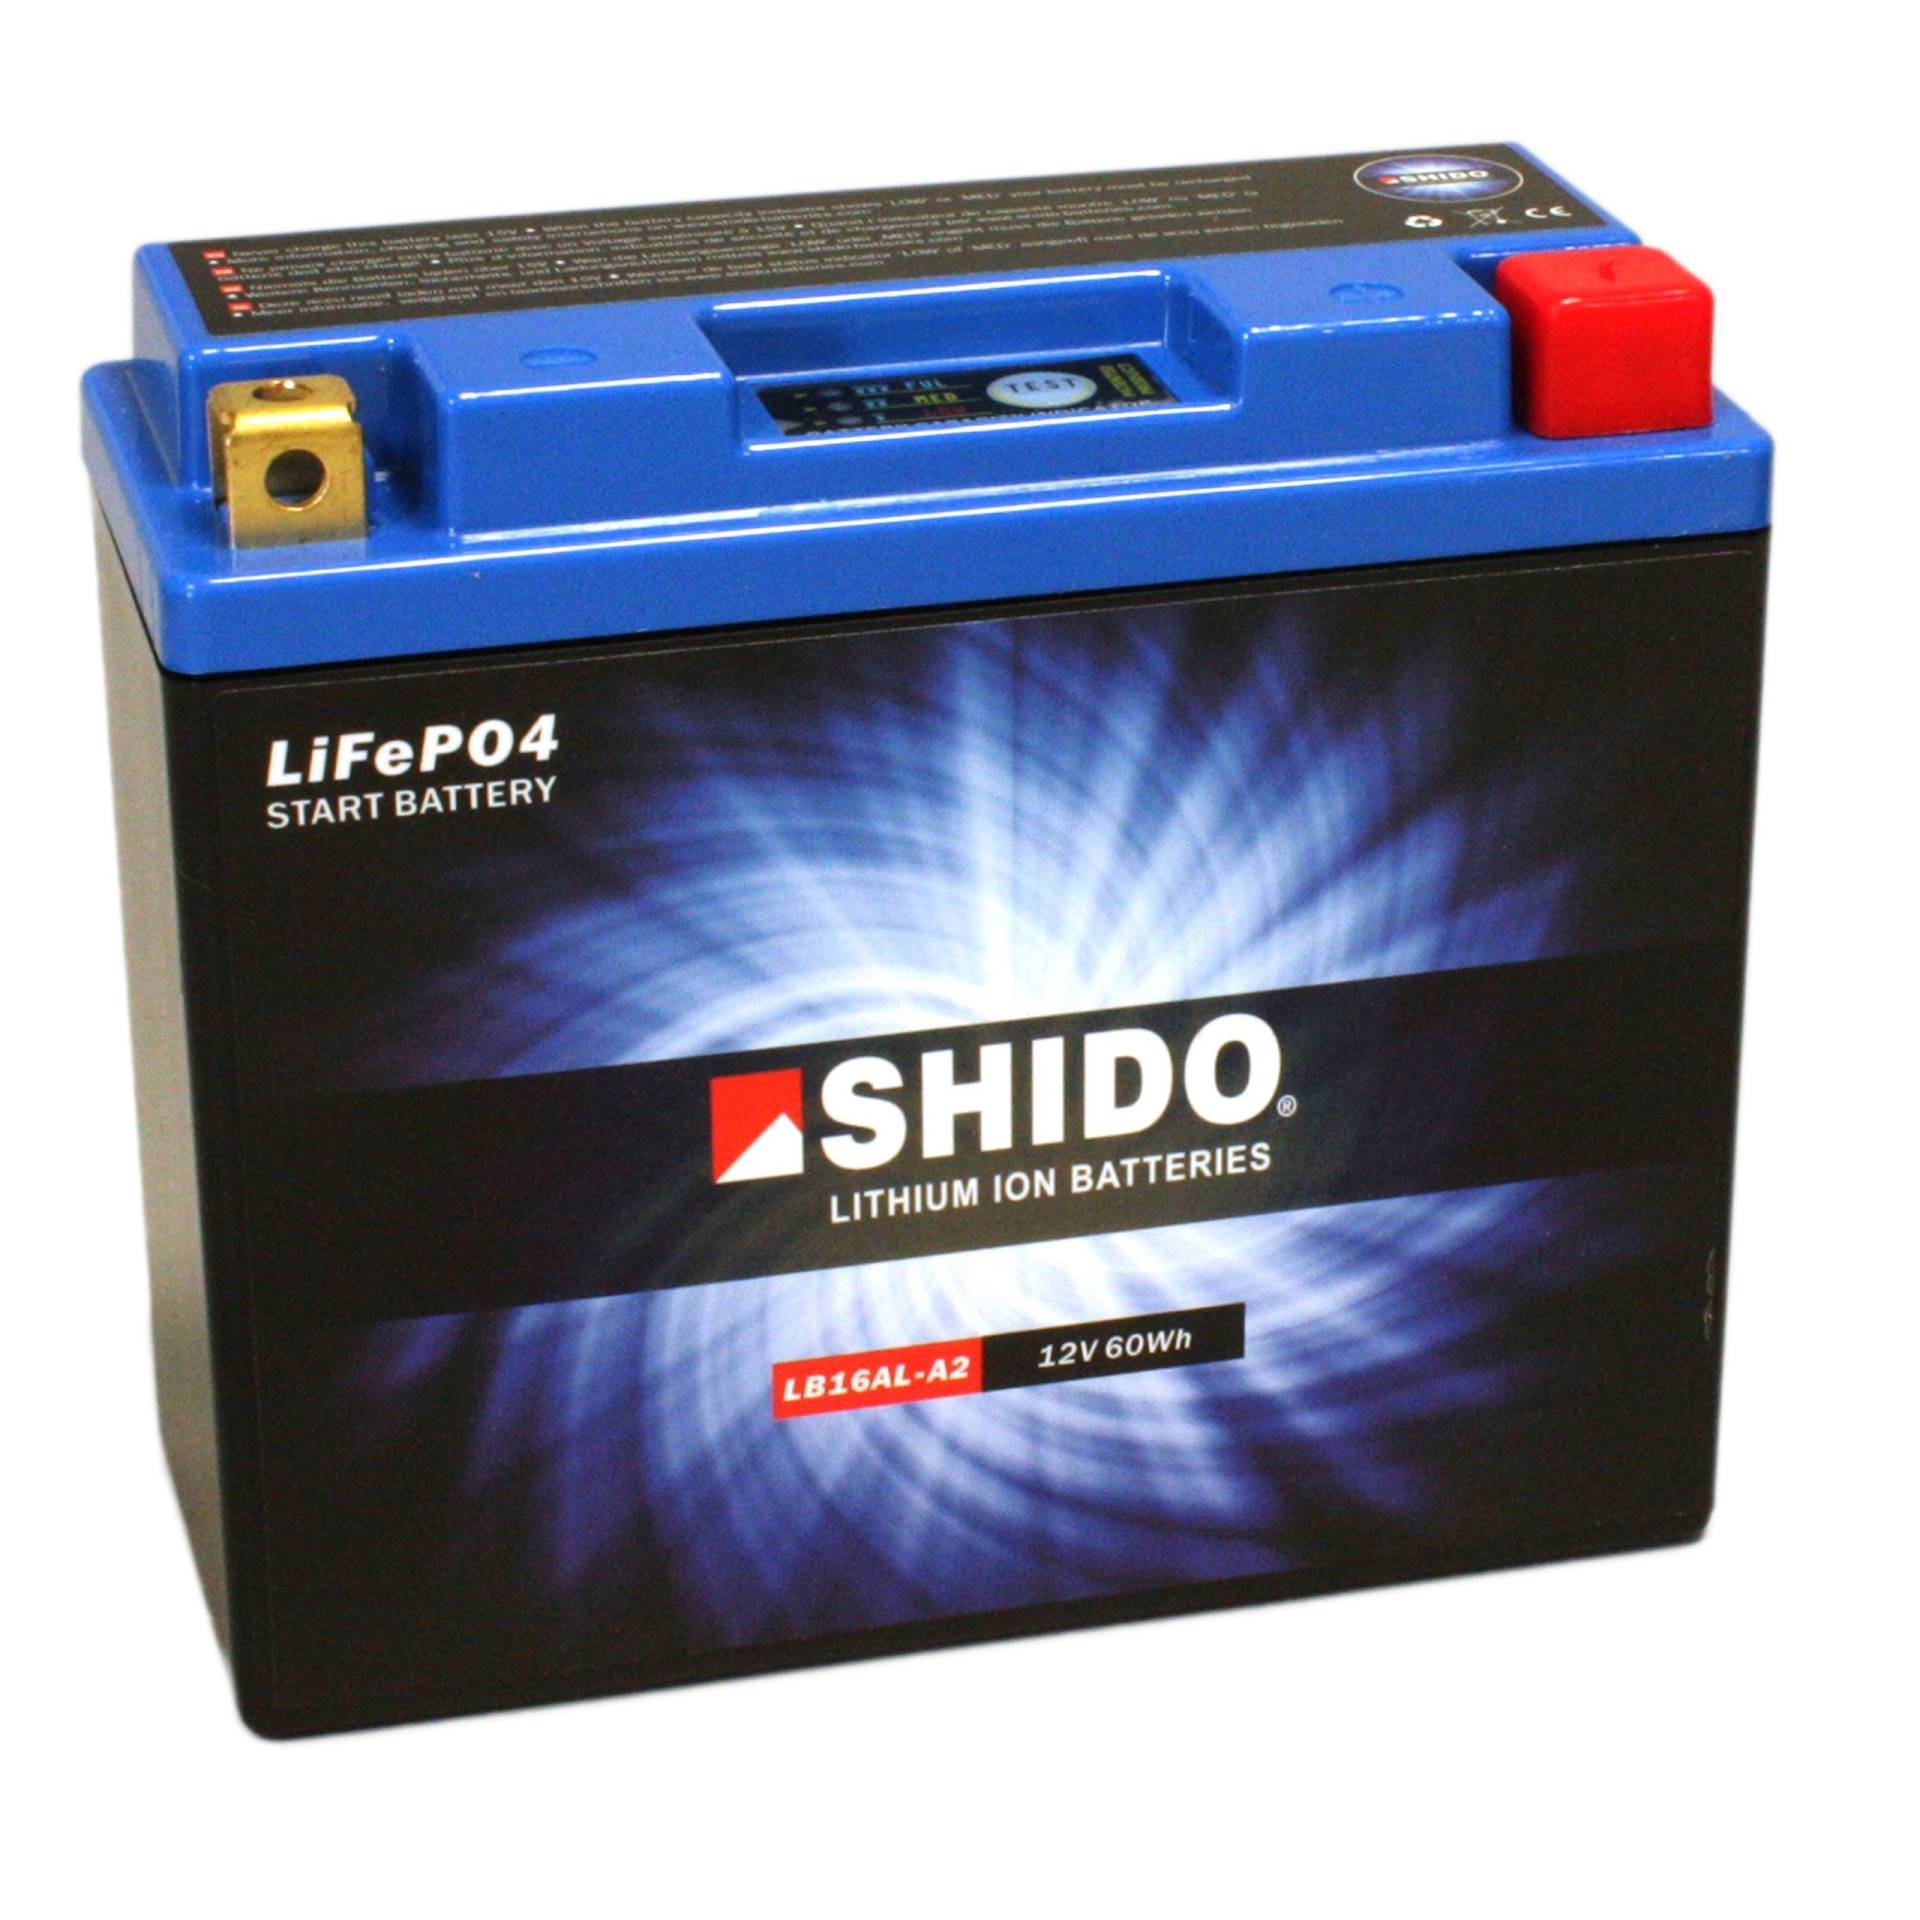 Batterie Shido Lithium LB16AL-A2 / YB16AL-A2, 12V/16AH (Maße: 207x72x164) für Ducati 748 Biposto/SP Baujahr 1996 von Shido